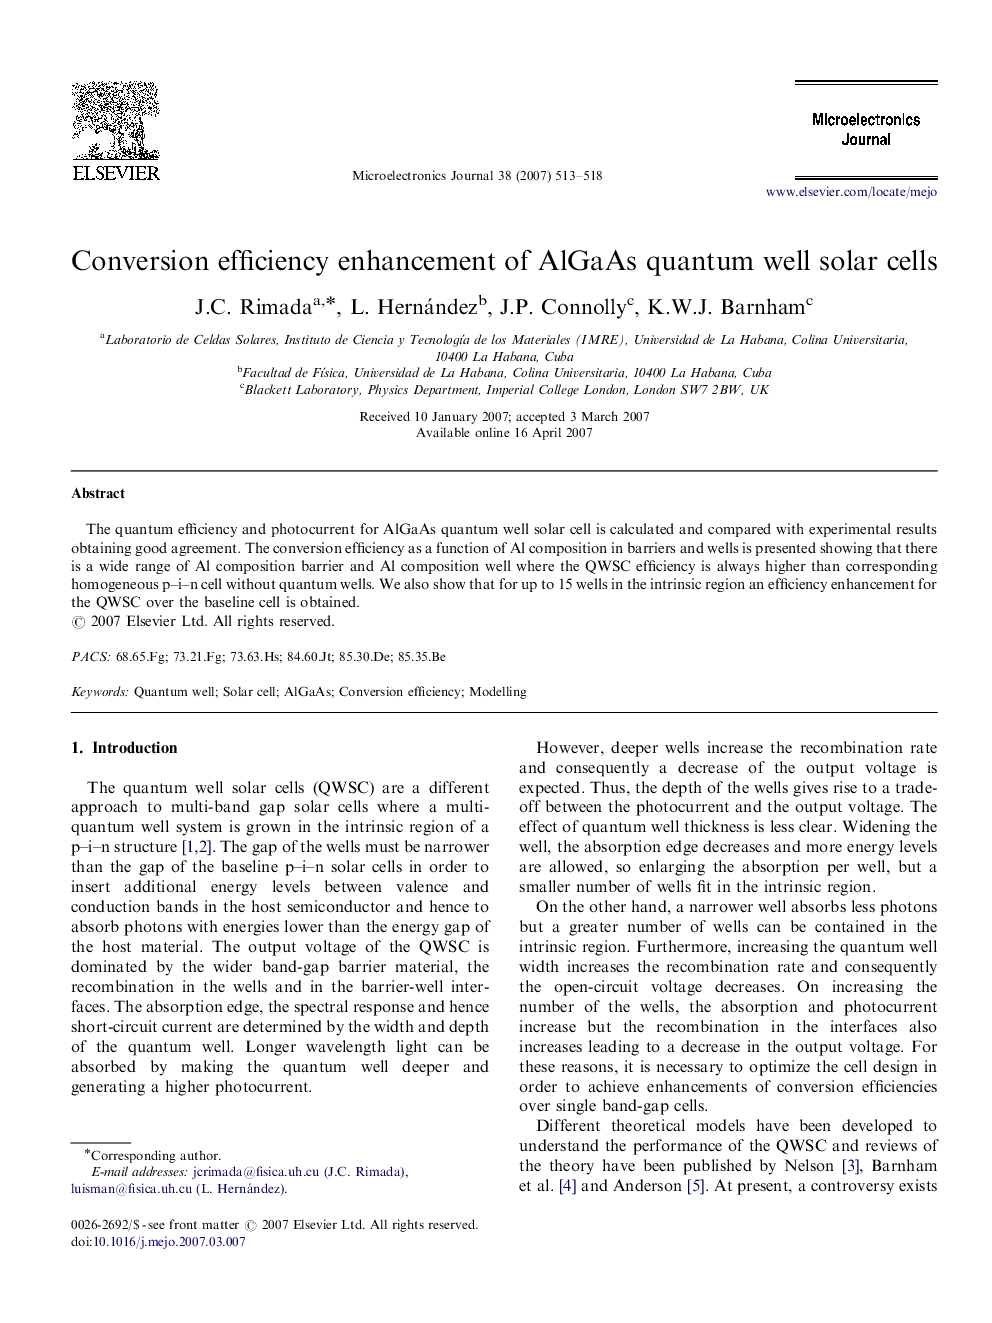 Conversion efficiency enhancement of AlGaAs quantum well solar cells